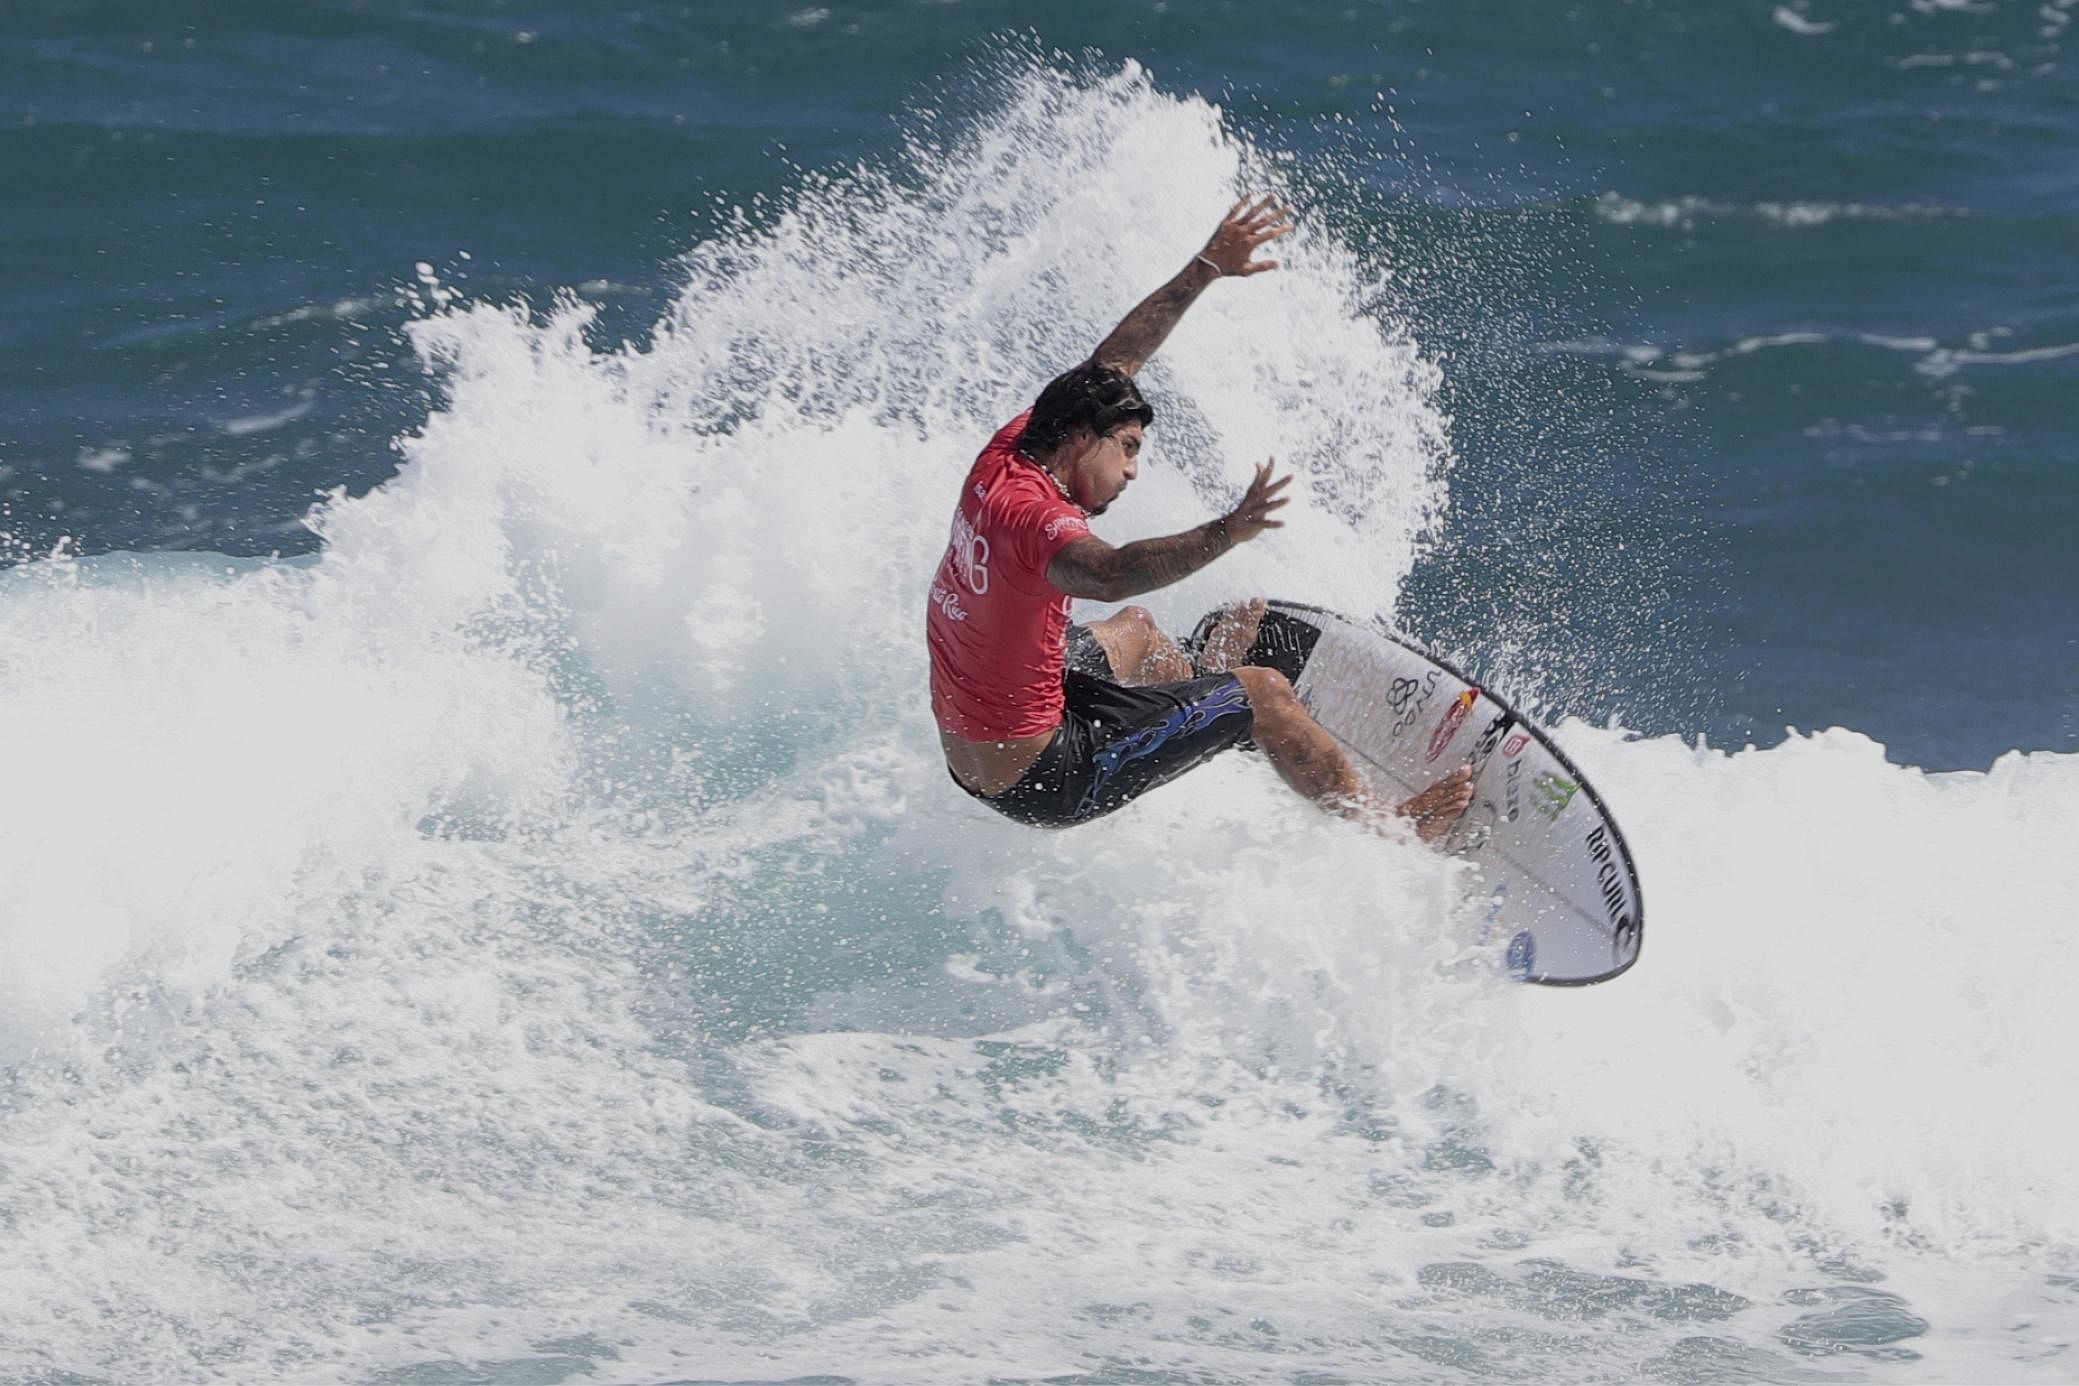 Brazil’s Gabriel Medina wins world surfing games, in line for Olympics spot